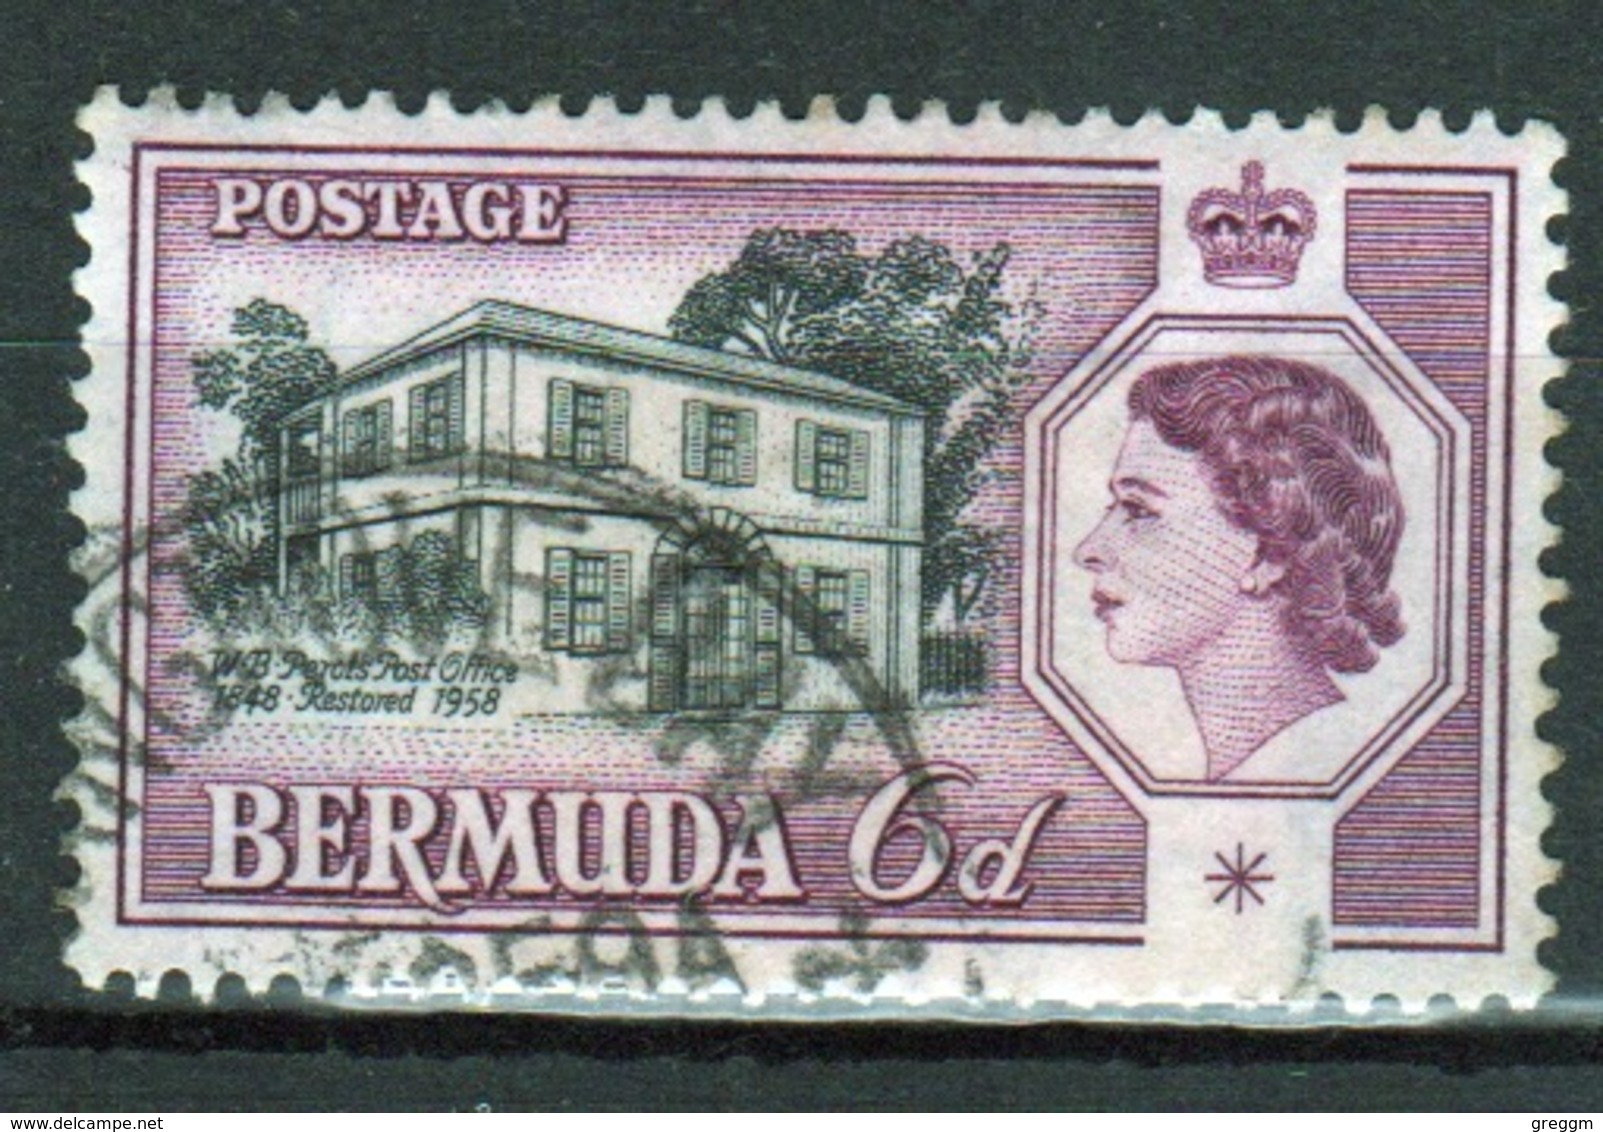 Bermuda Elizabeth II 1959 6d Showing Perot's Post Office. - Bermuda